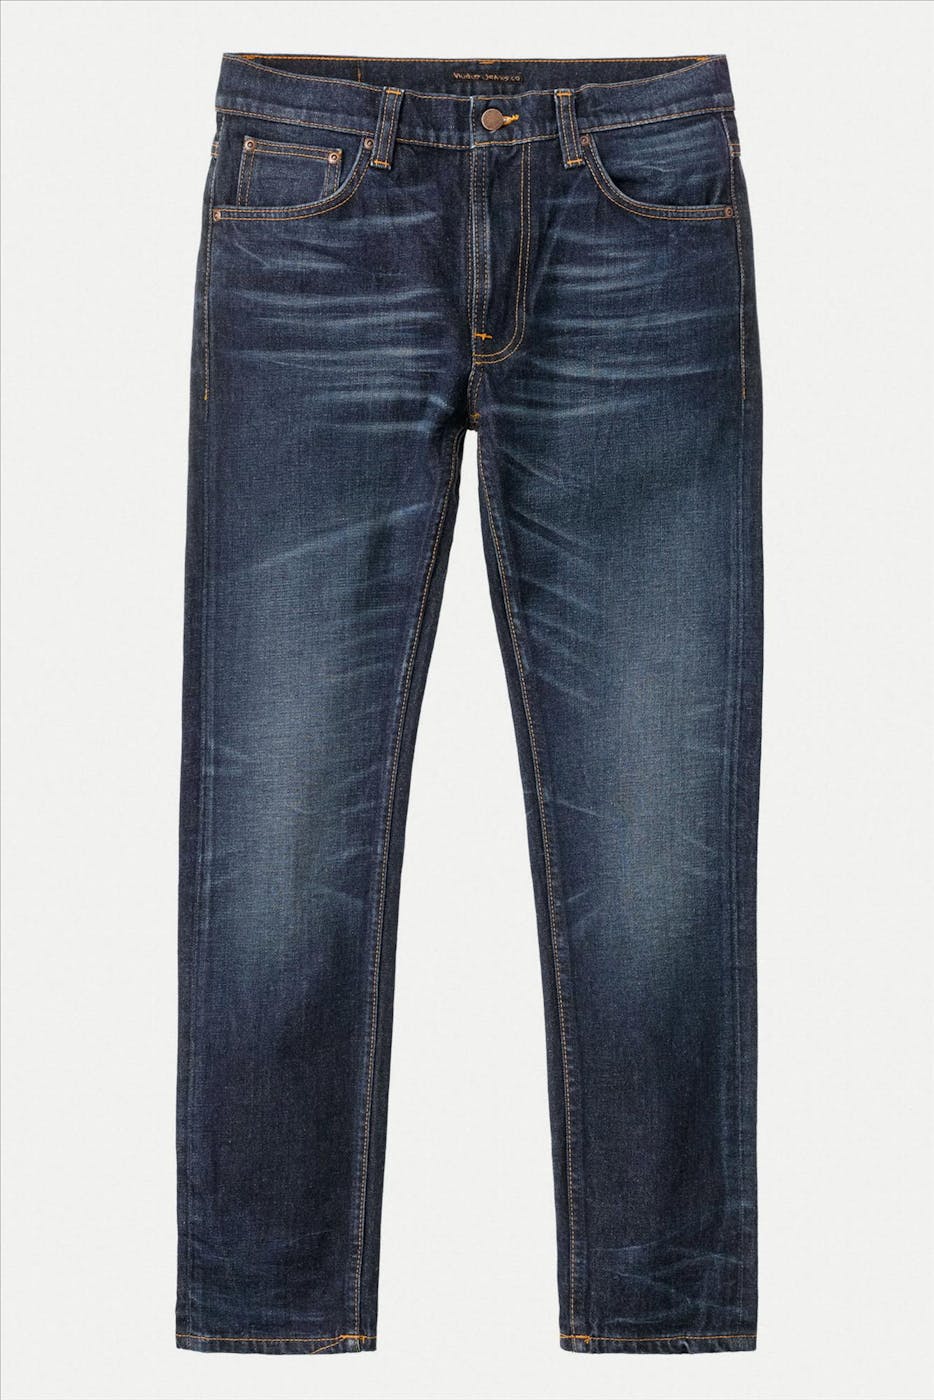 Nudie Jeans Co. - Donkerblauwe Blue Thunder Lean Dean Slim Tapered jeans